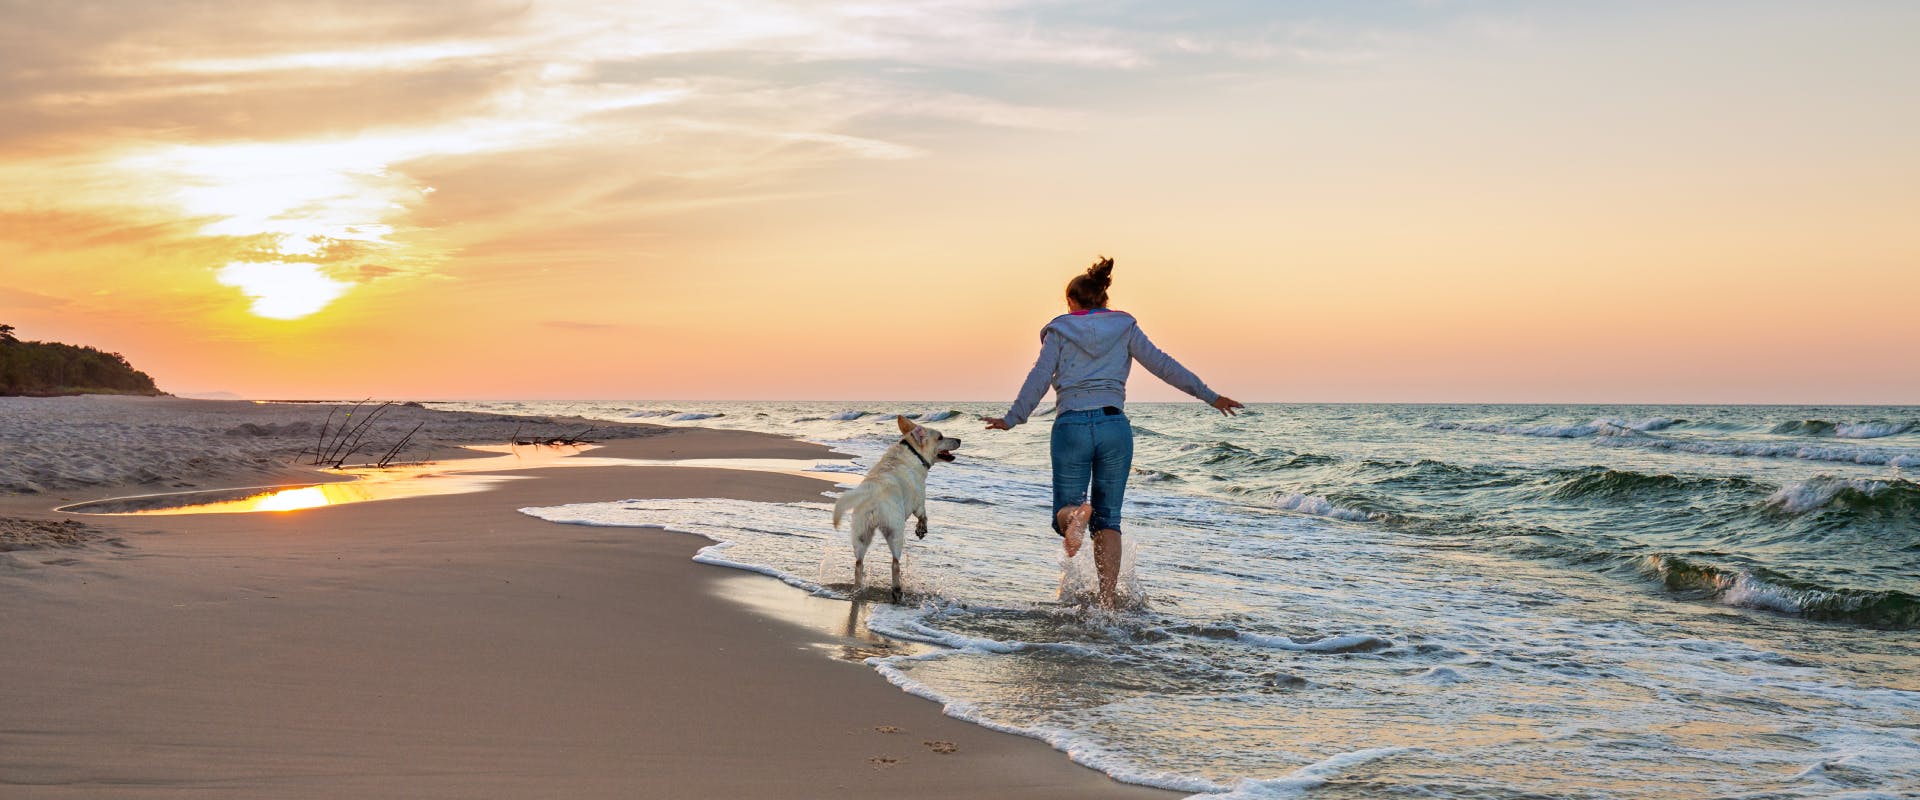 A woman runs along a beach with a dog.